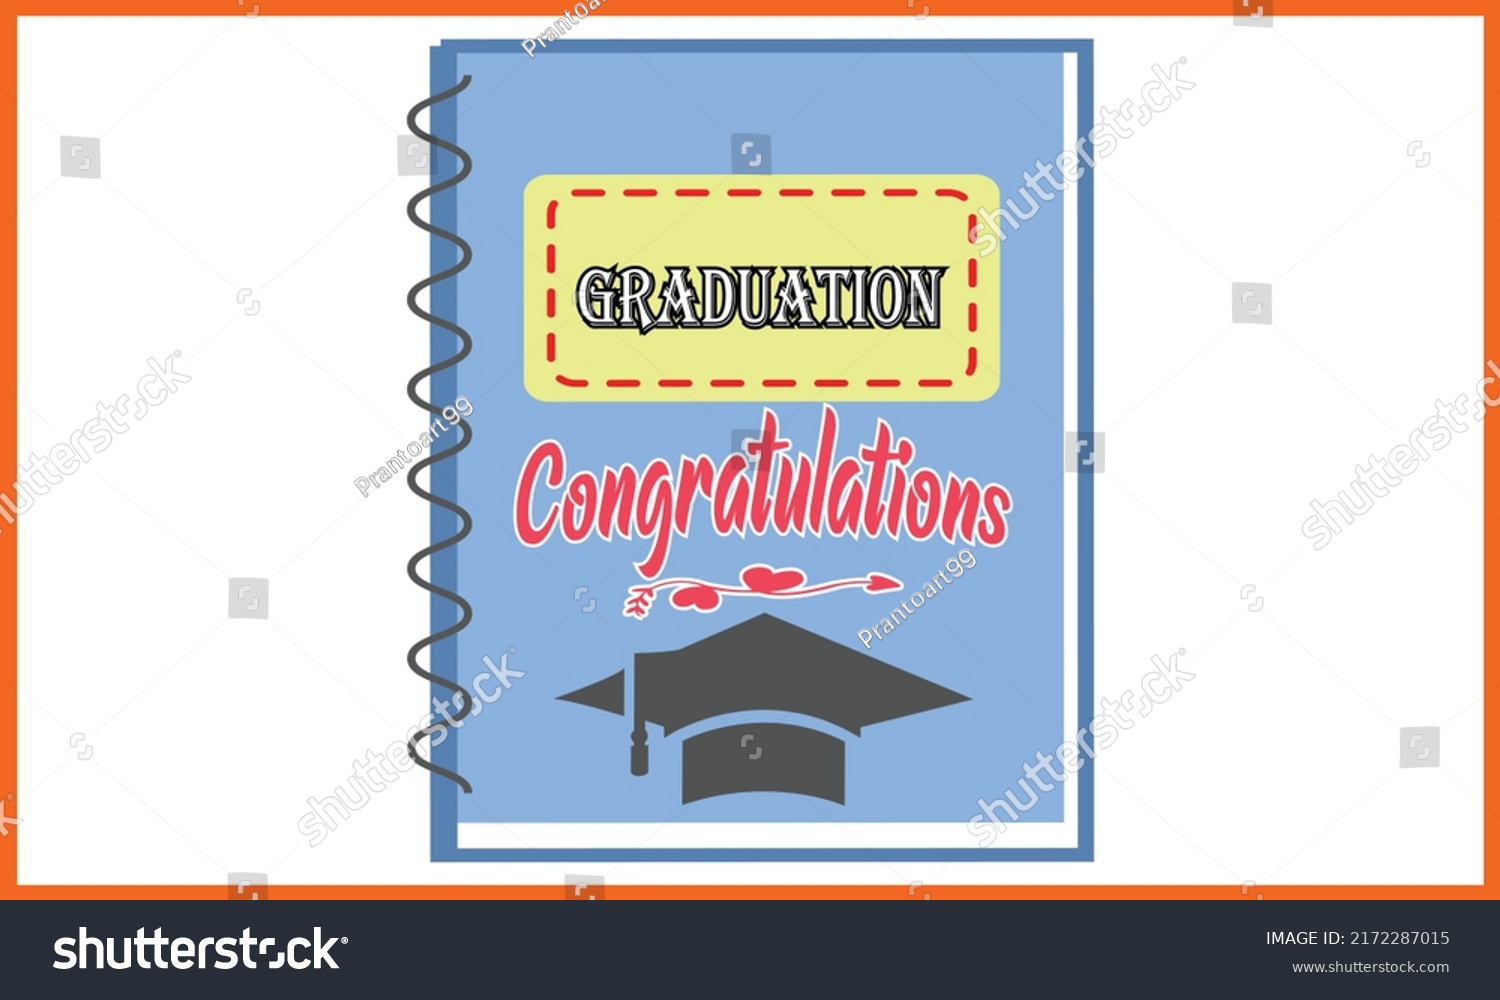 SVG of Graduation Congratulations Book illustration Design. svg